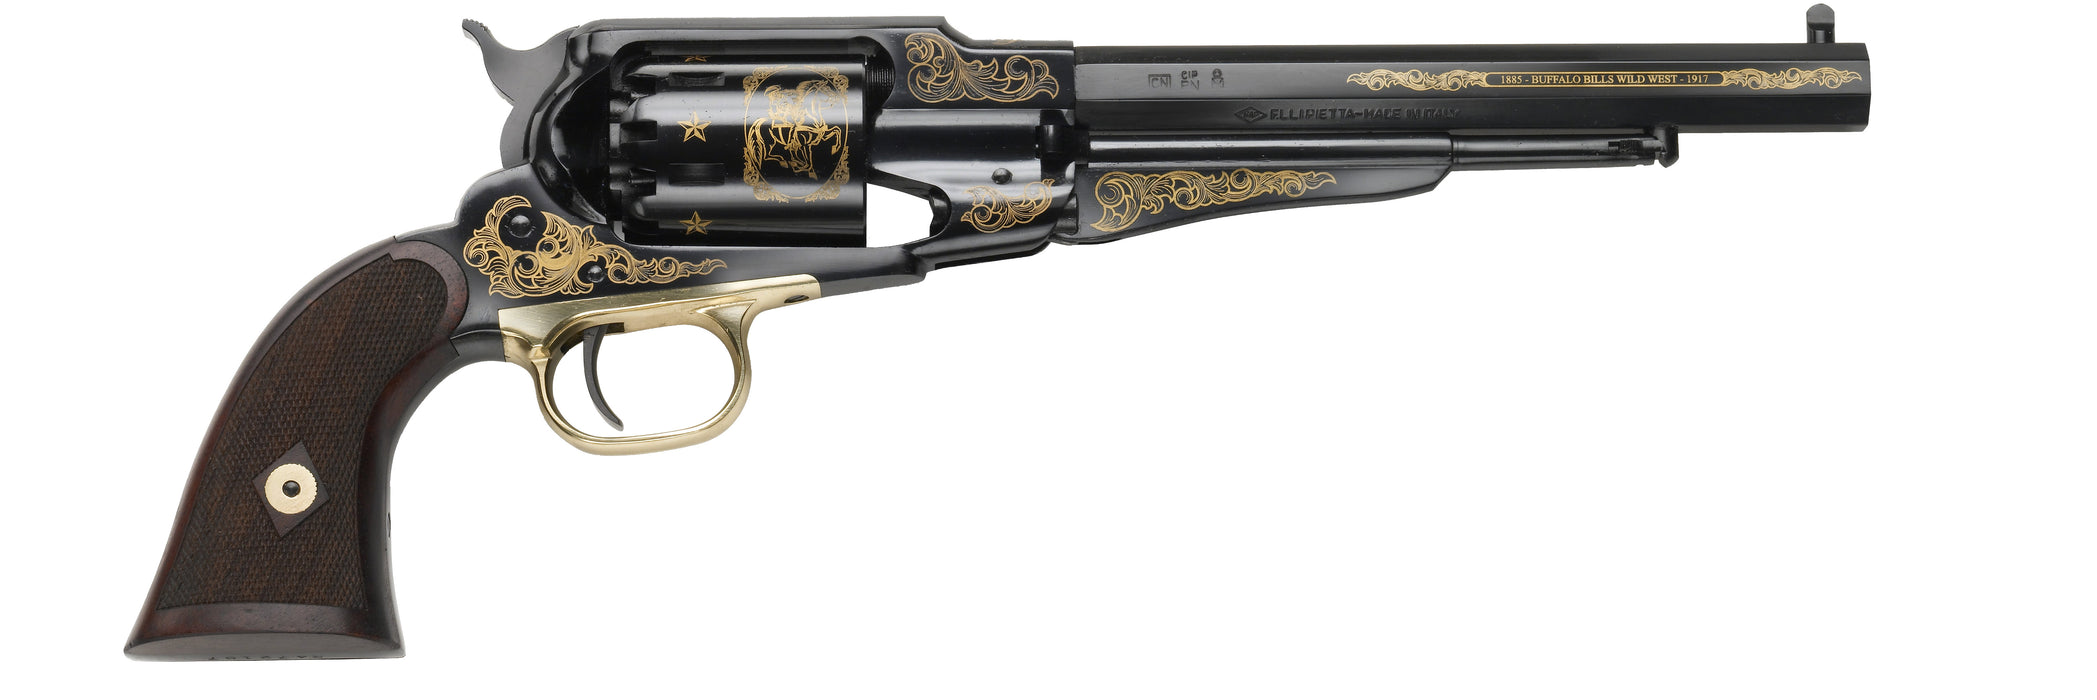 Pietta 1858 New Army Revolver Buffalo Bills Wild West Model